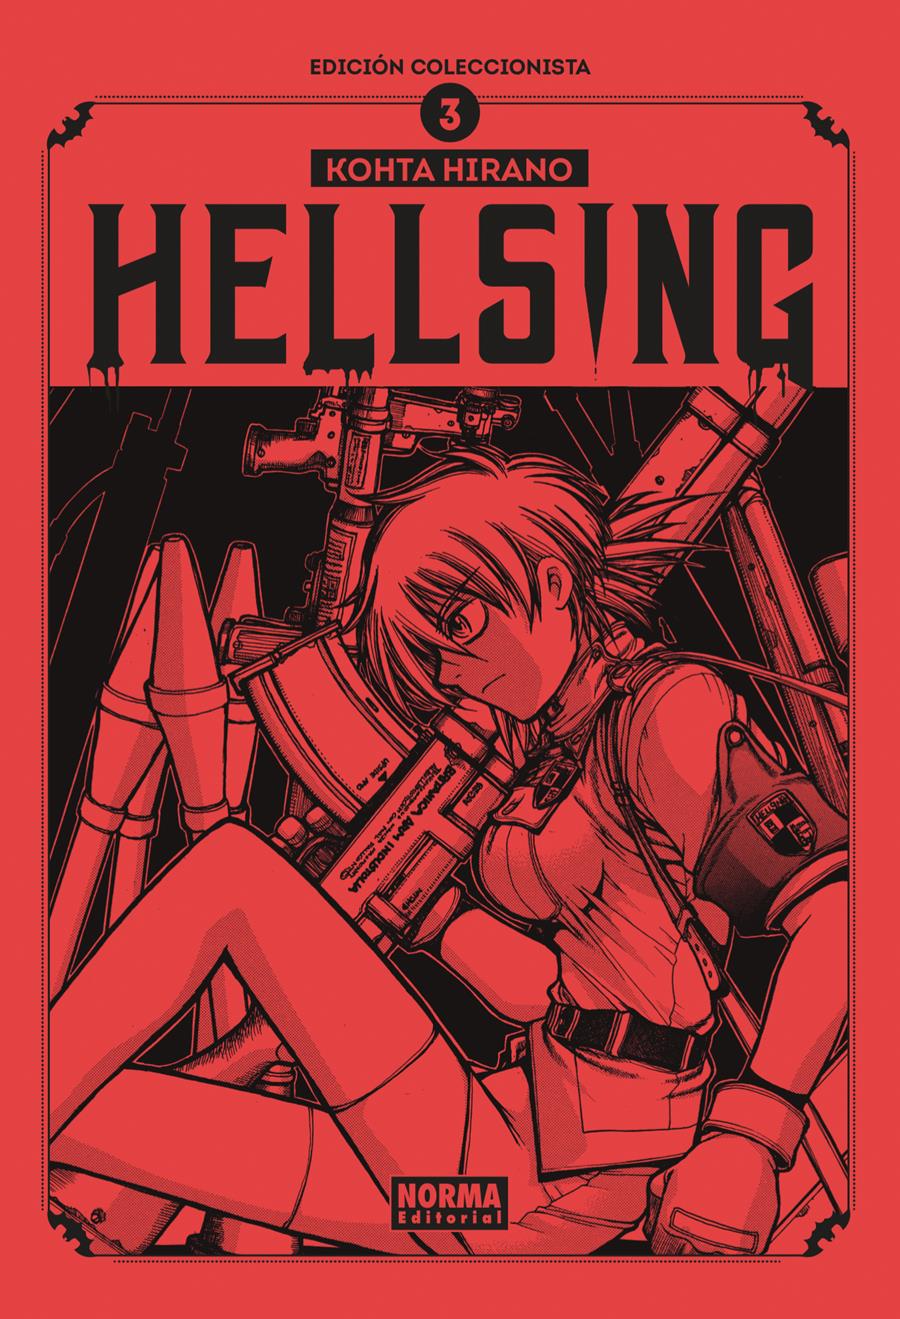 Hellsing 03. Edición coleccionista | N0921-NOR19 | Kohta Hirano | Terra de Còmic - Tu tienda de cómics online especializada en cómics, manga y merchandising